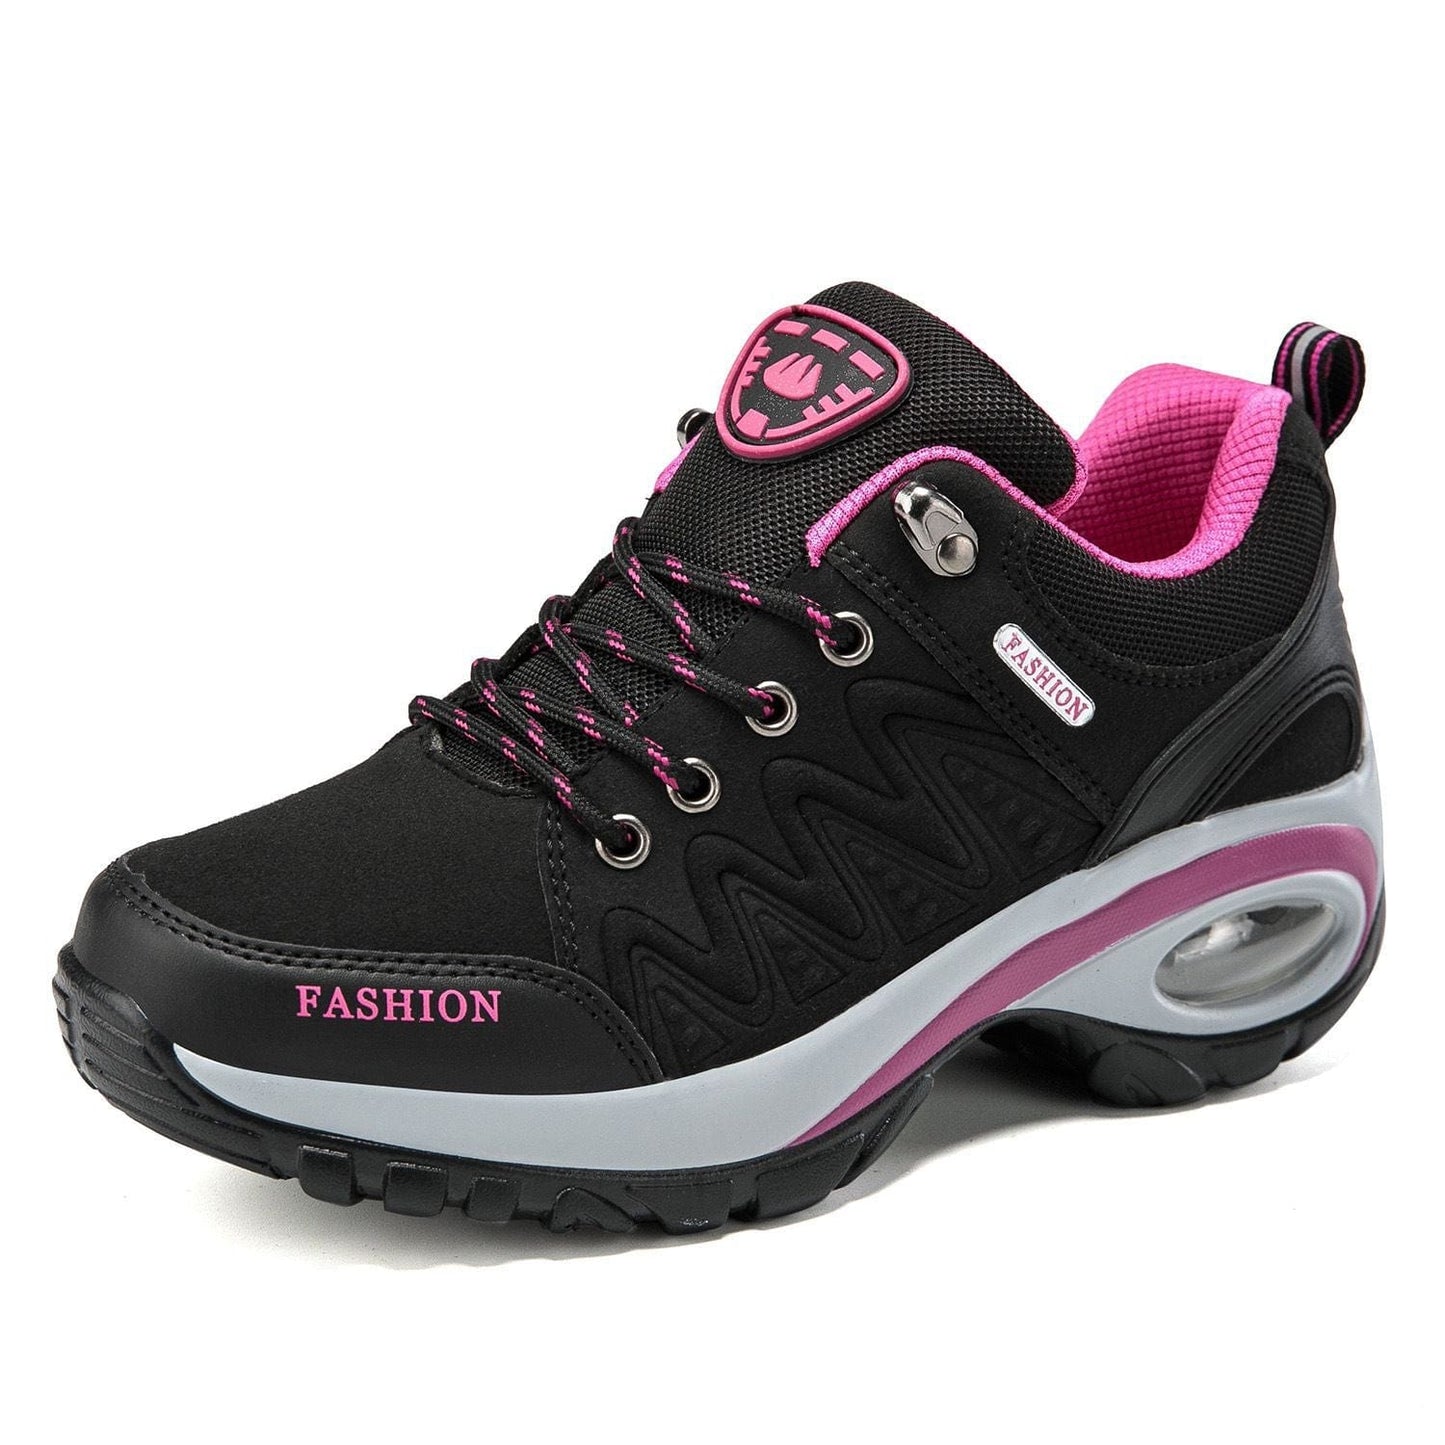 G SHADOW Flashlander Women Sneakers Air Cushion Design Platform Shoes